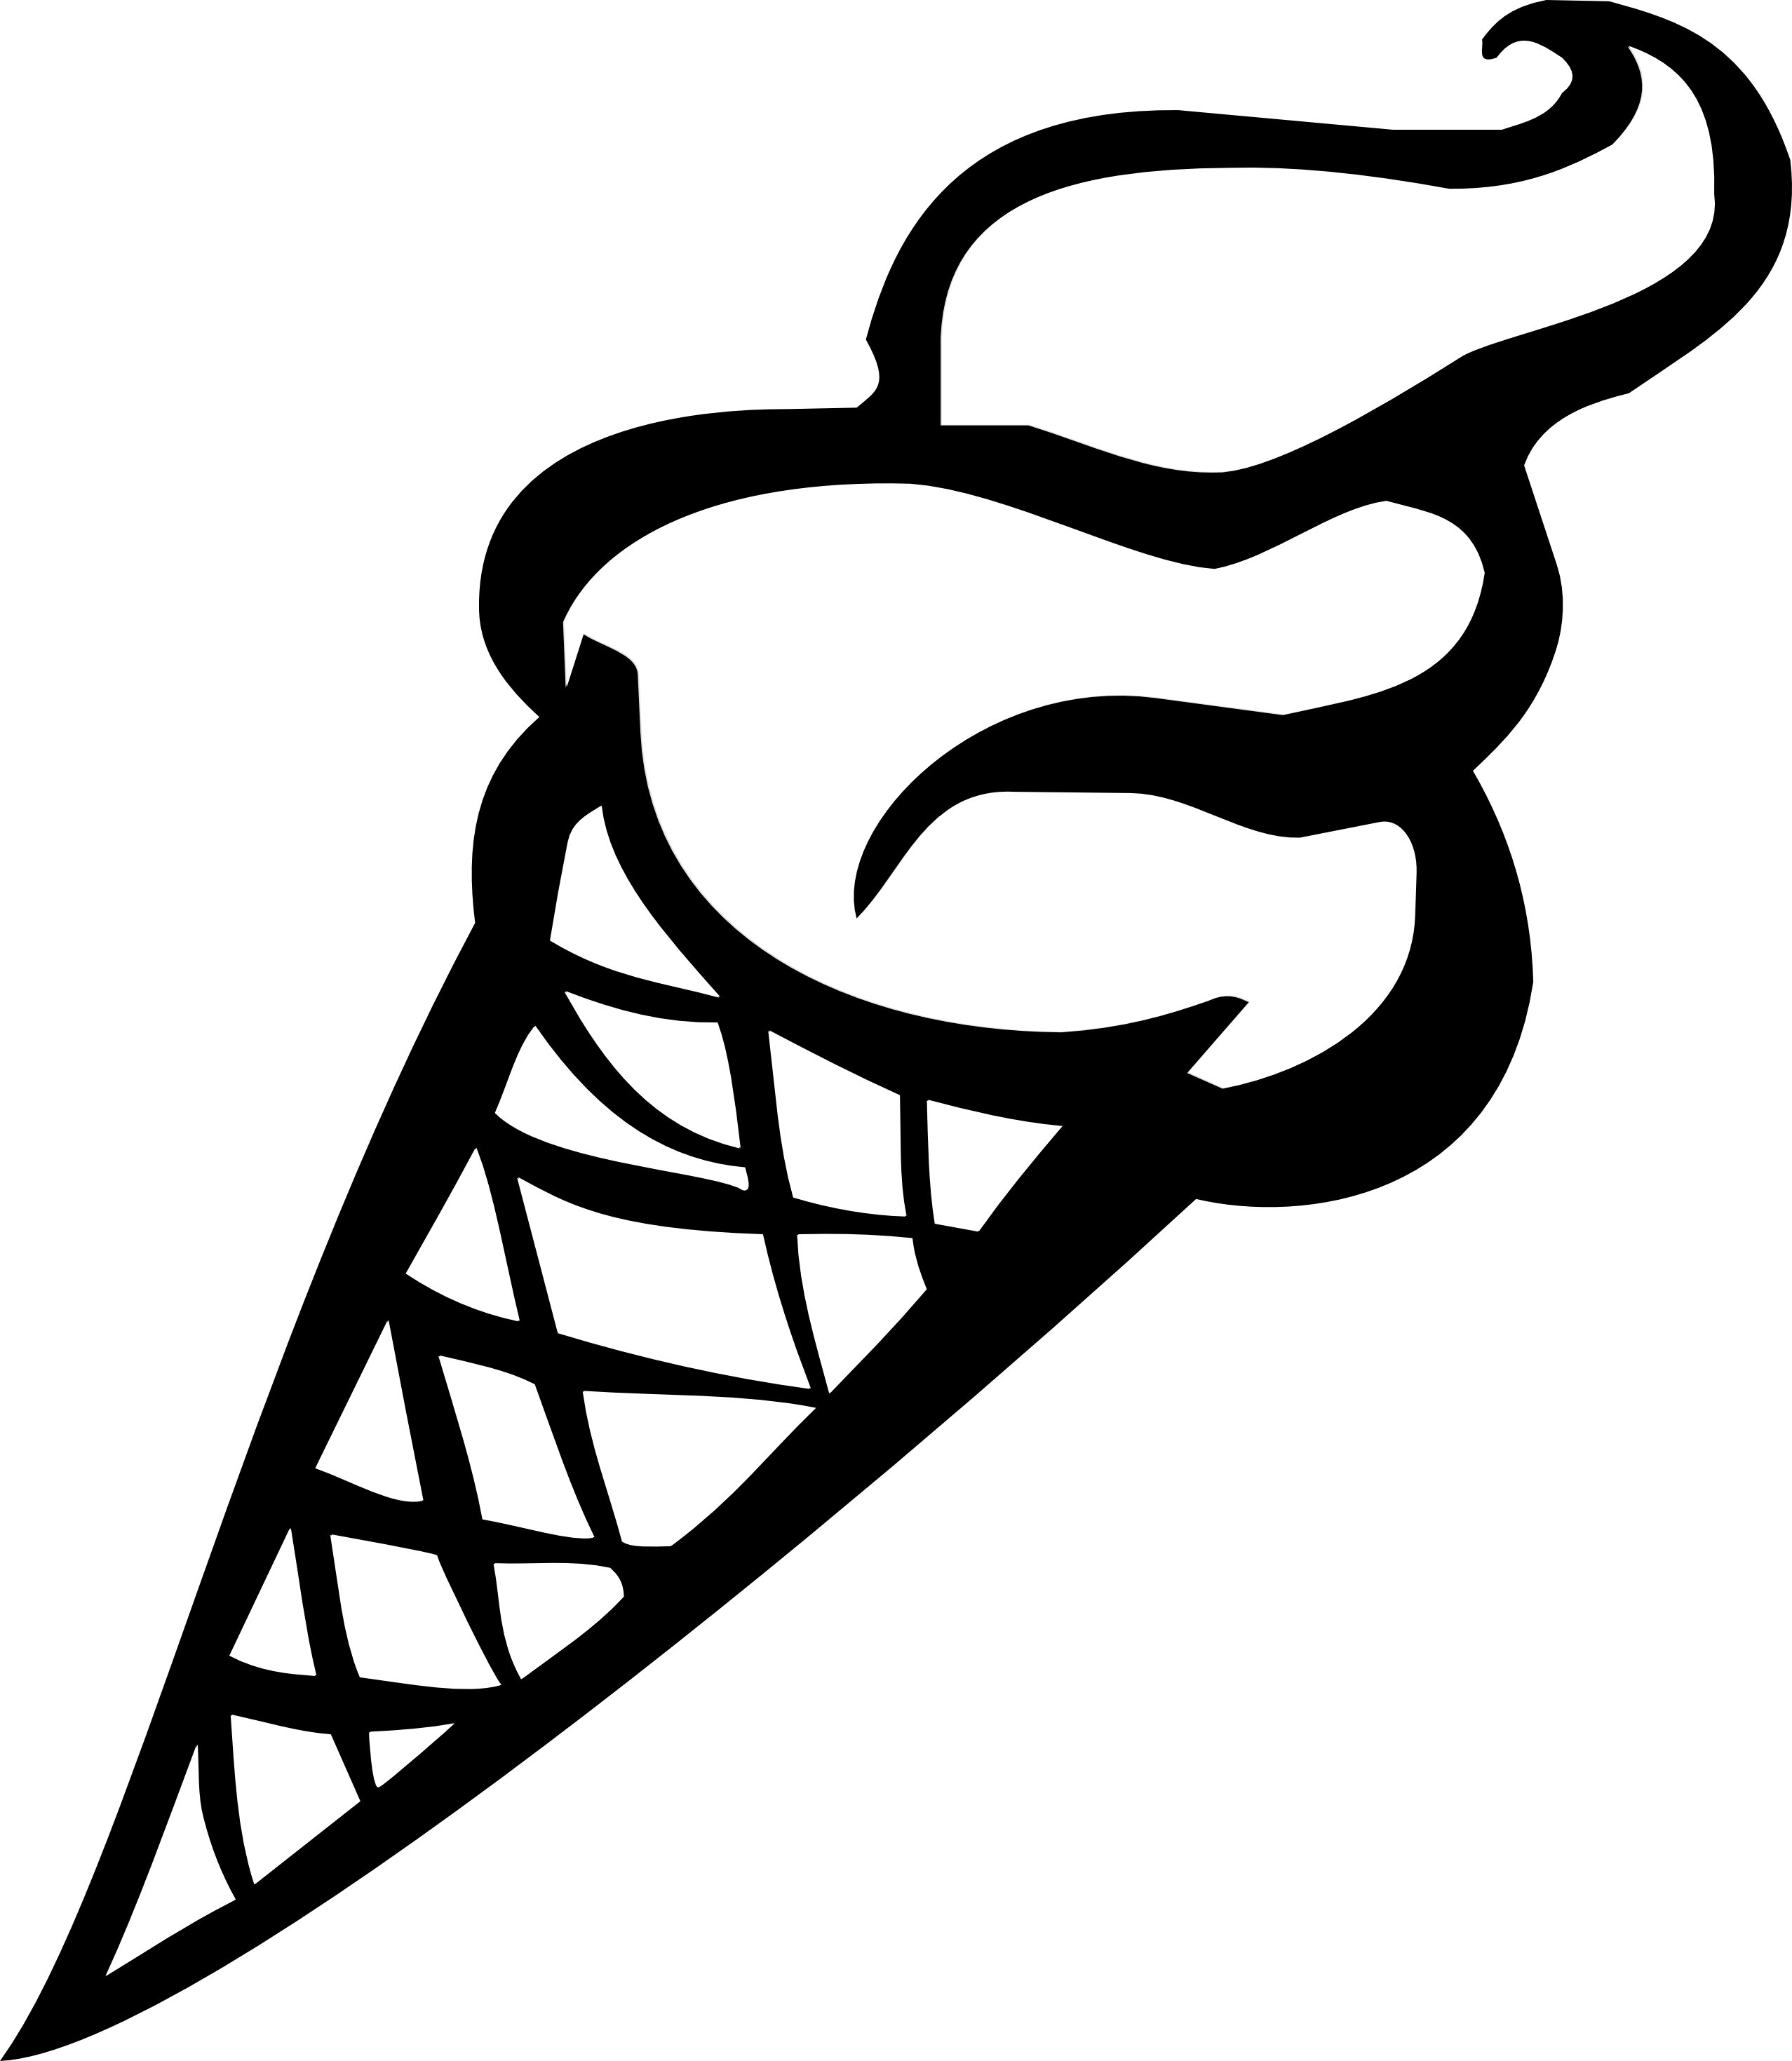 Soft Serve Ice Cream Cone (b 